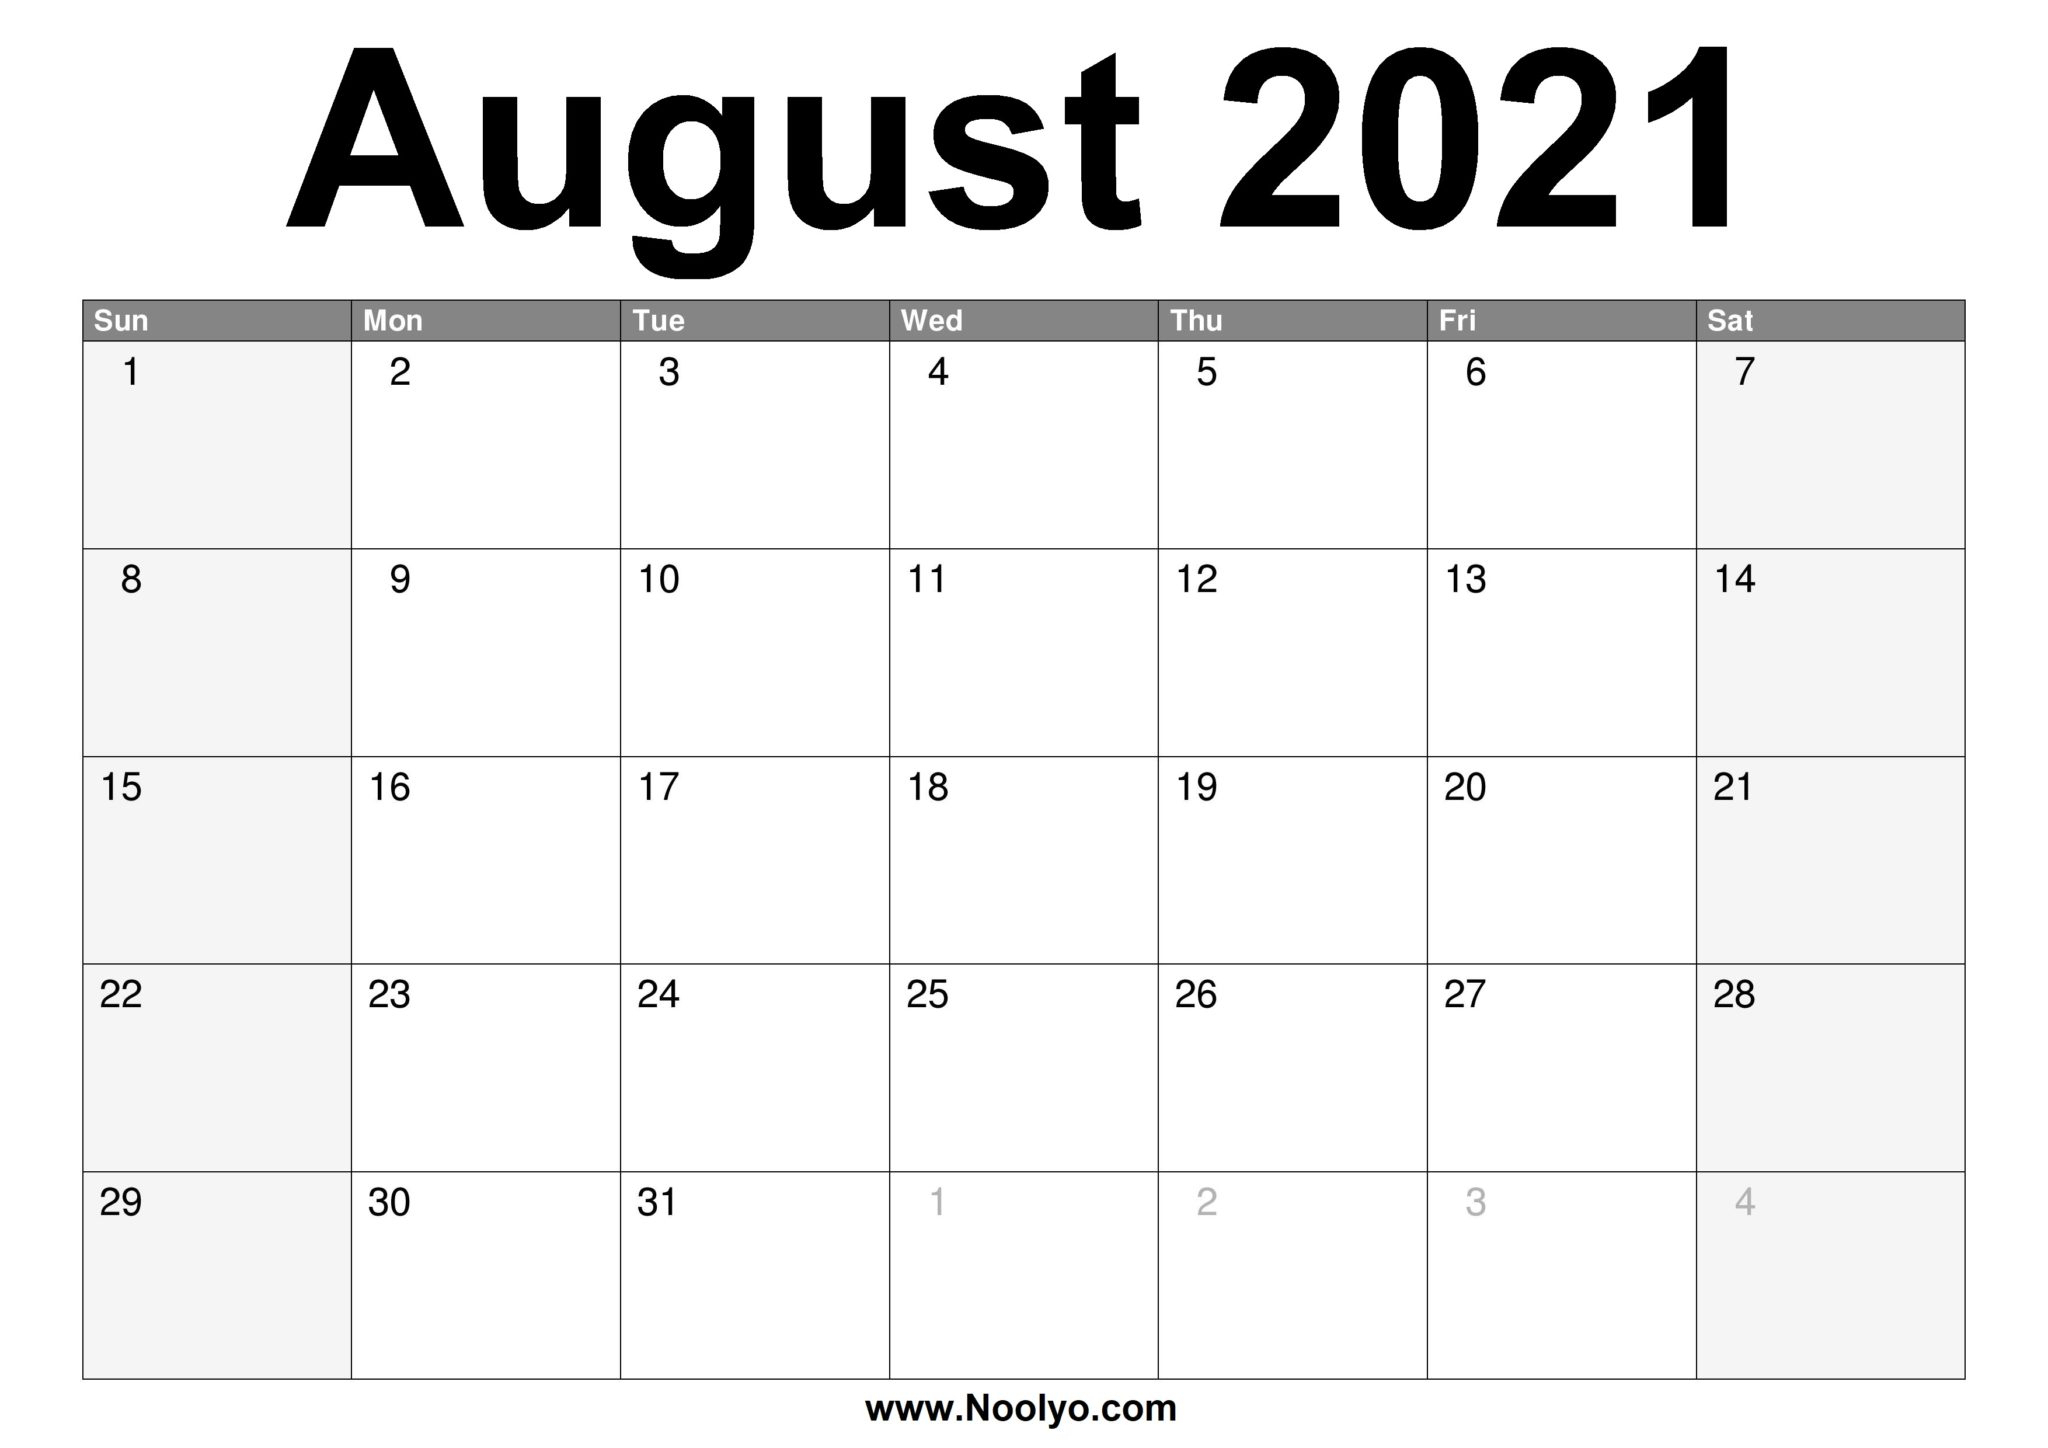 Catch Free Calendar August 2022